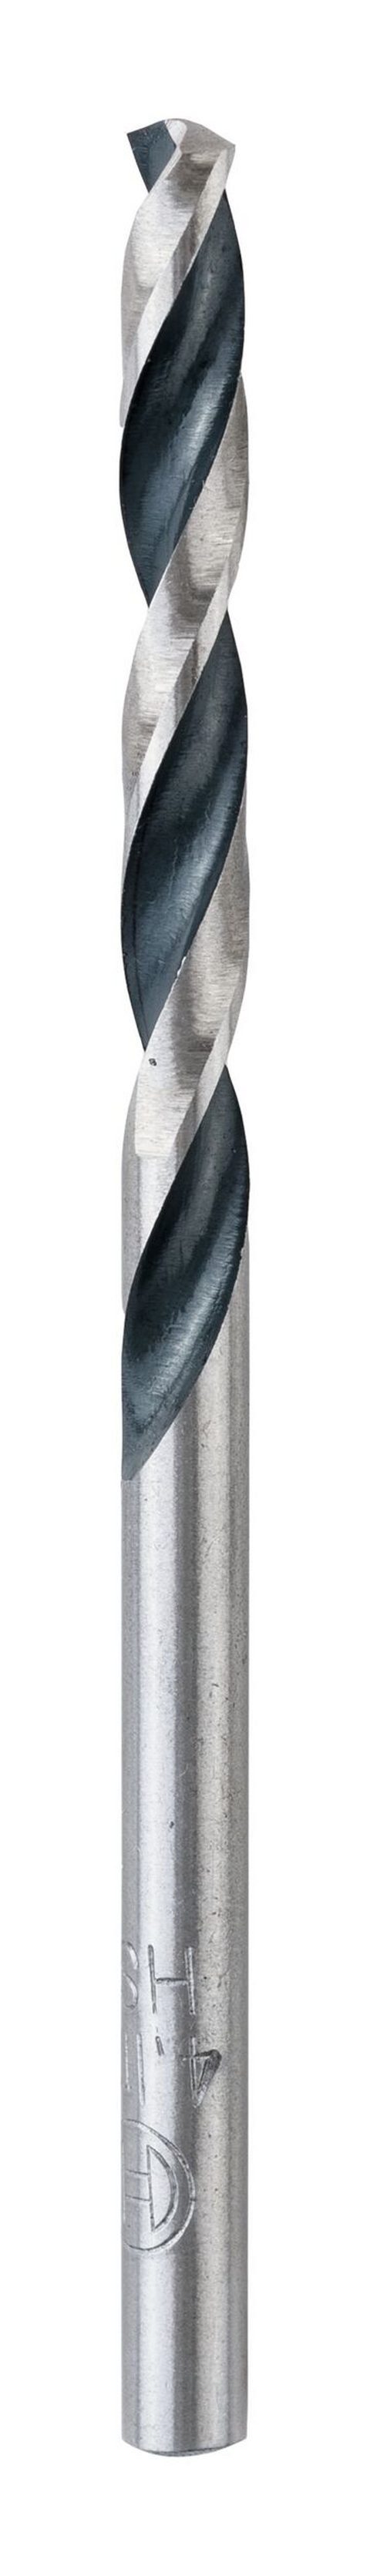 mm Metallspiralbohrer (DIN Stück), BOSCH 4,1 HSS 10er-Pack Metallbohrer, - (10 - PointTeQ 338)